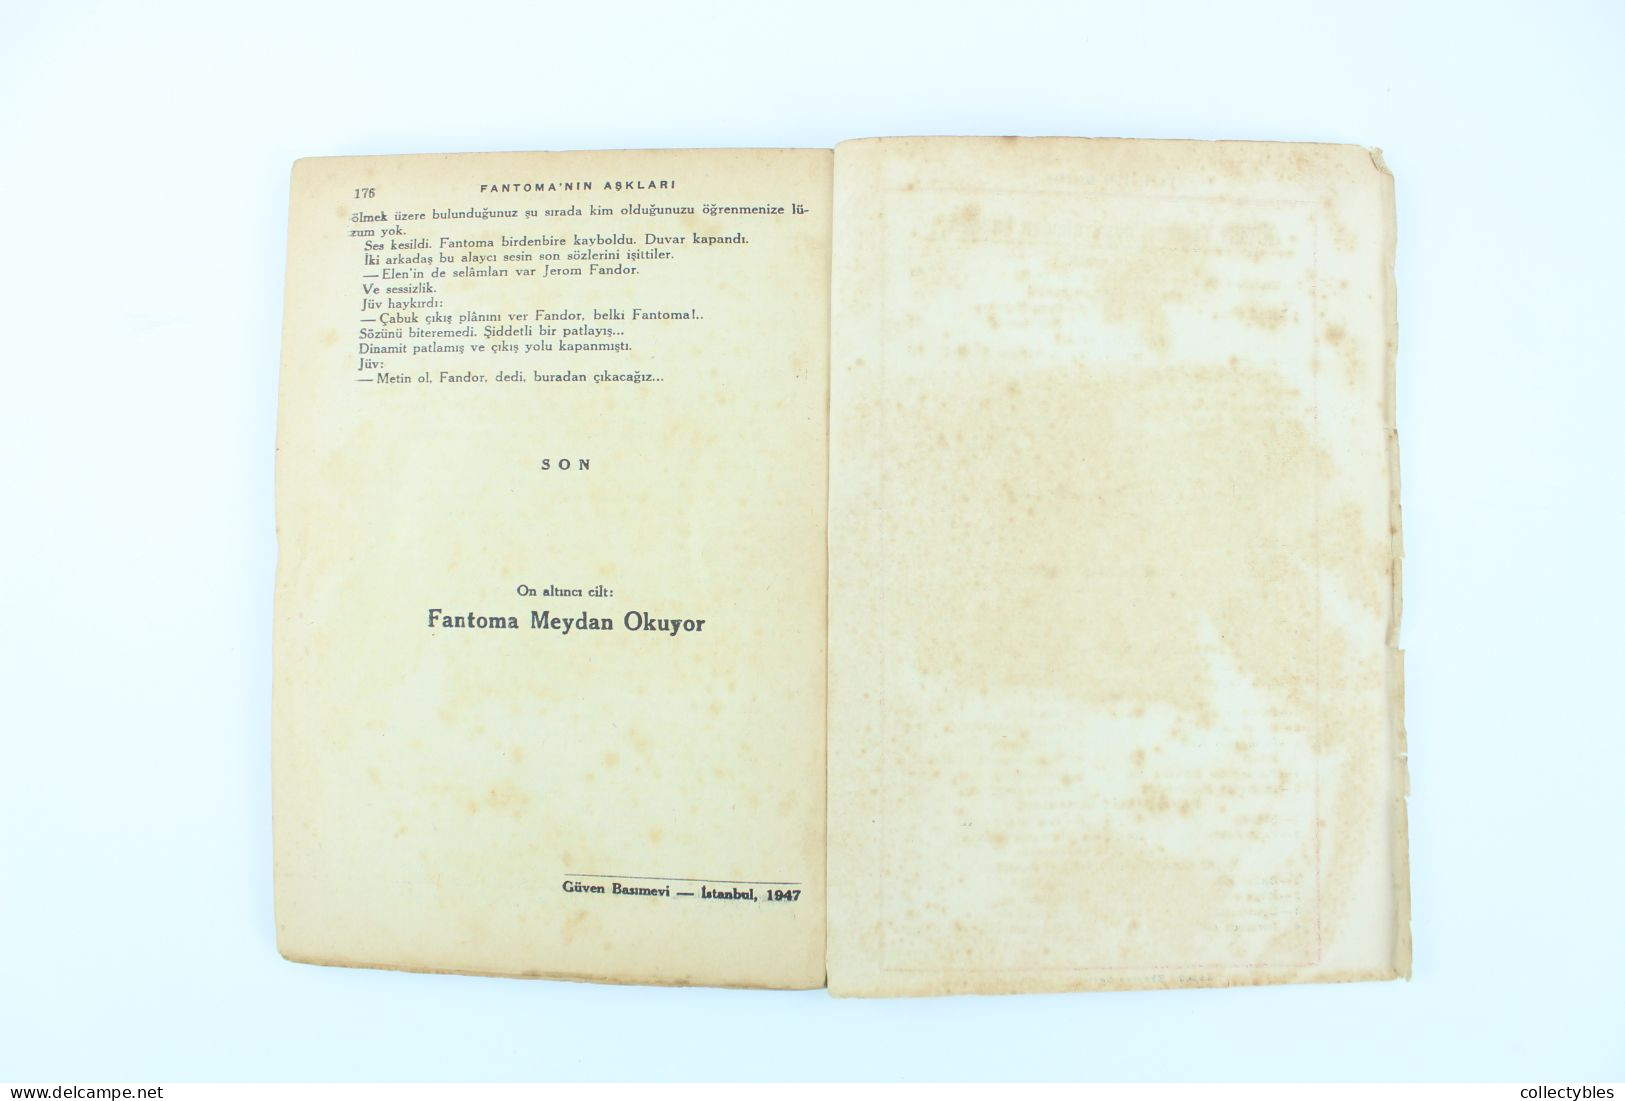 FANTOMAS Turkish Book Series 1940s COMPLETE SET 1-15 Marcel Allain FANTOMA Pierre Souvestre FREE SHIPPING Fantômas RARE